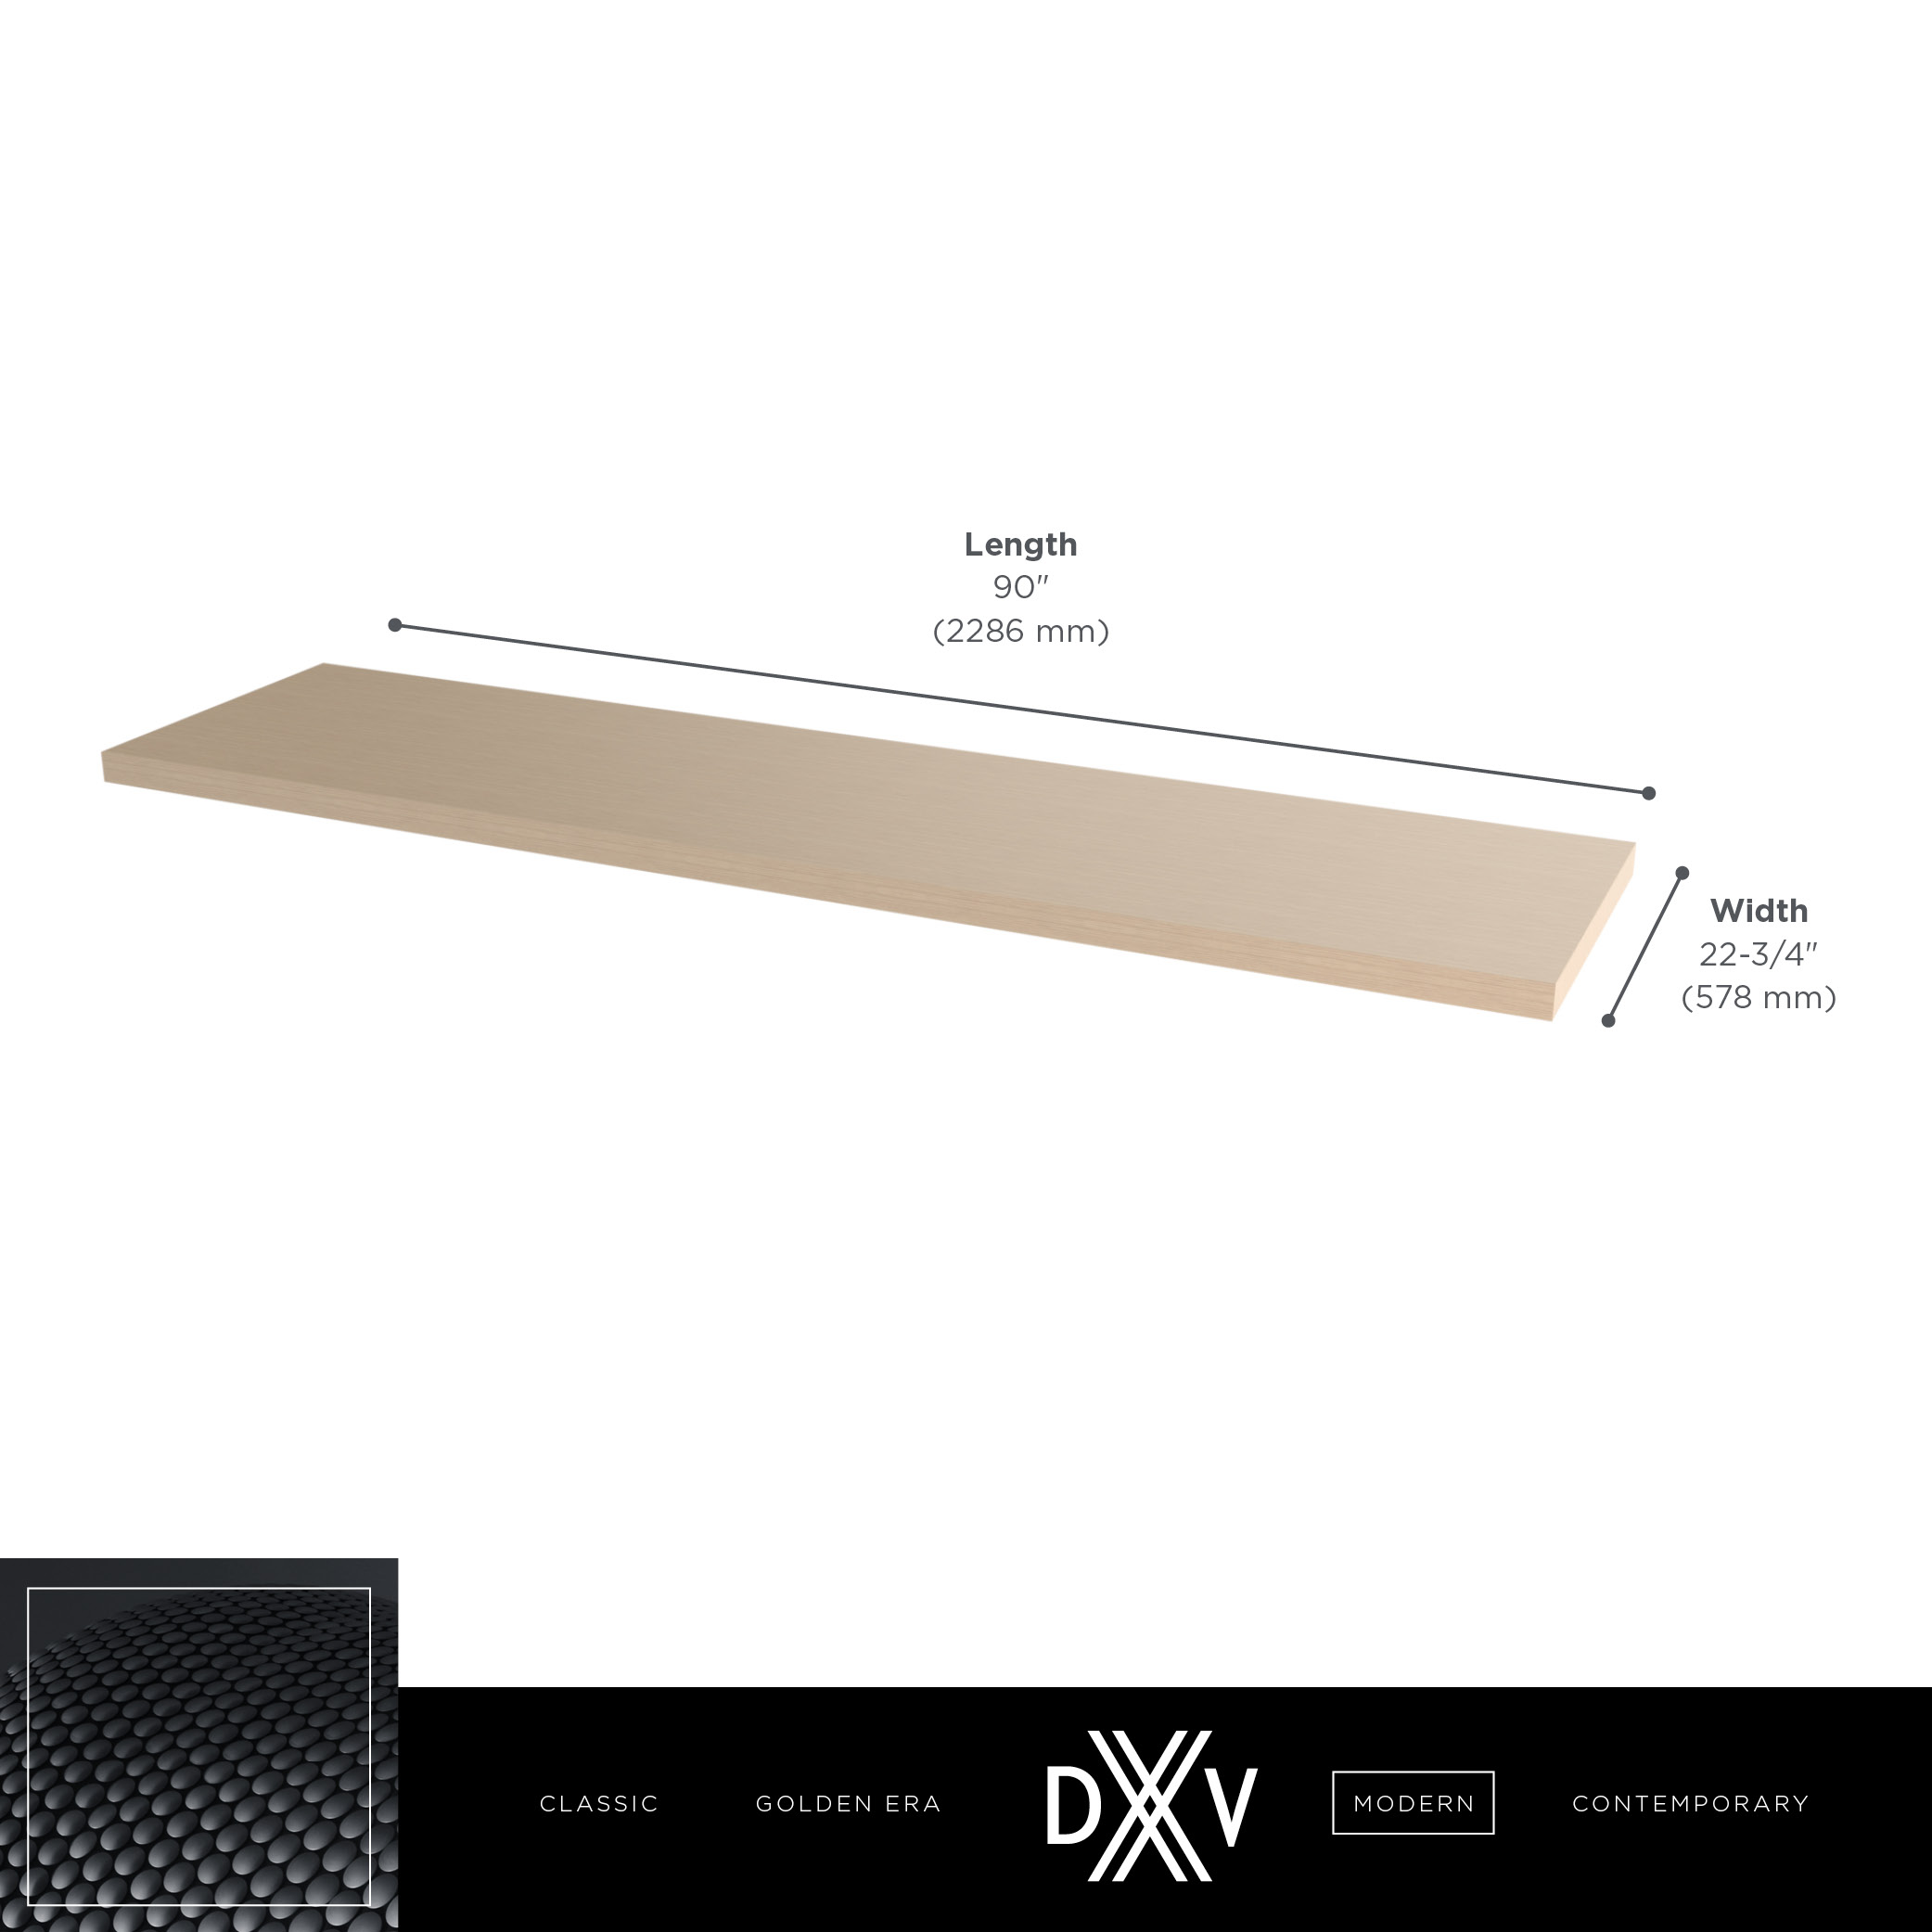 DXV Modulus® 90 in. Countertop Slab